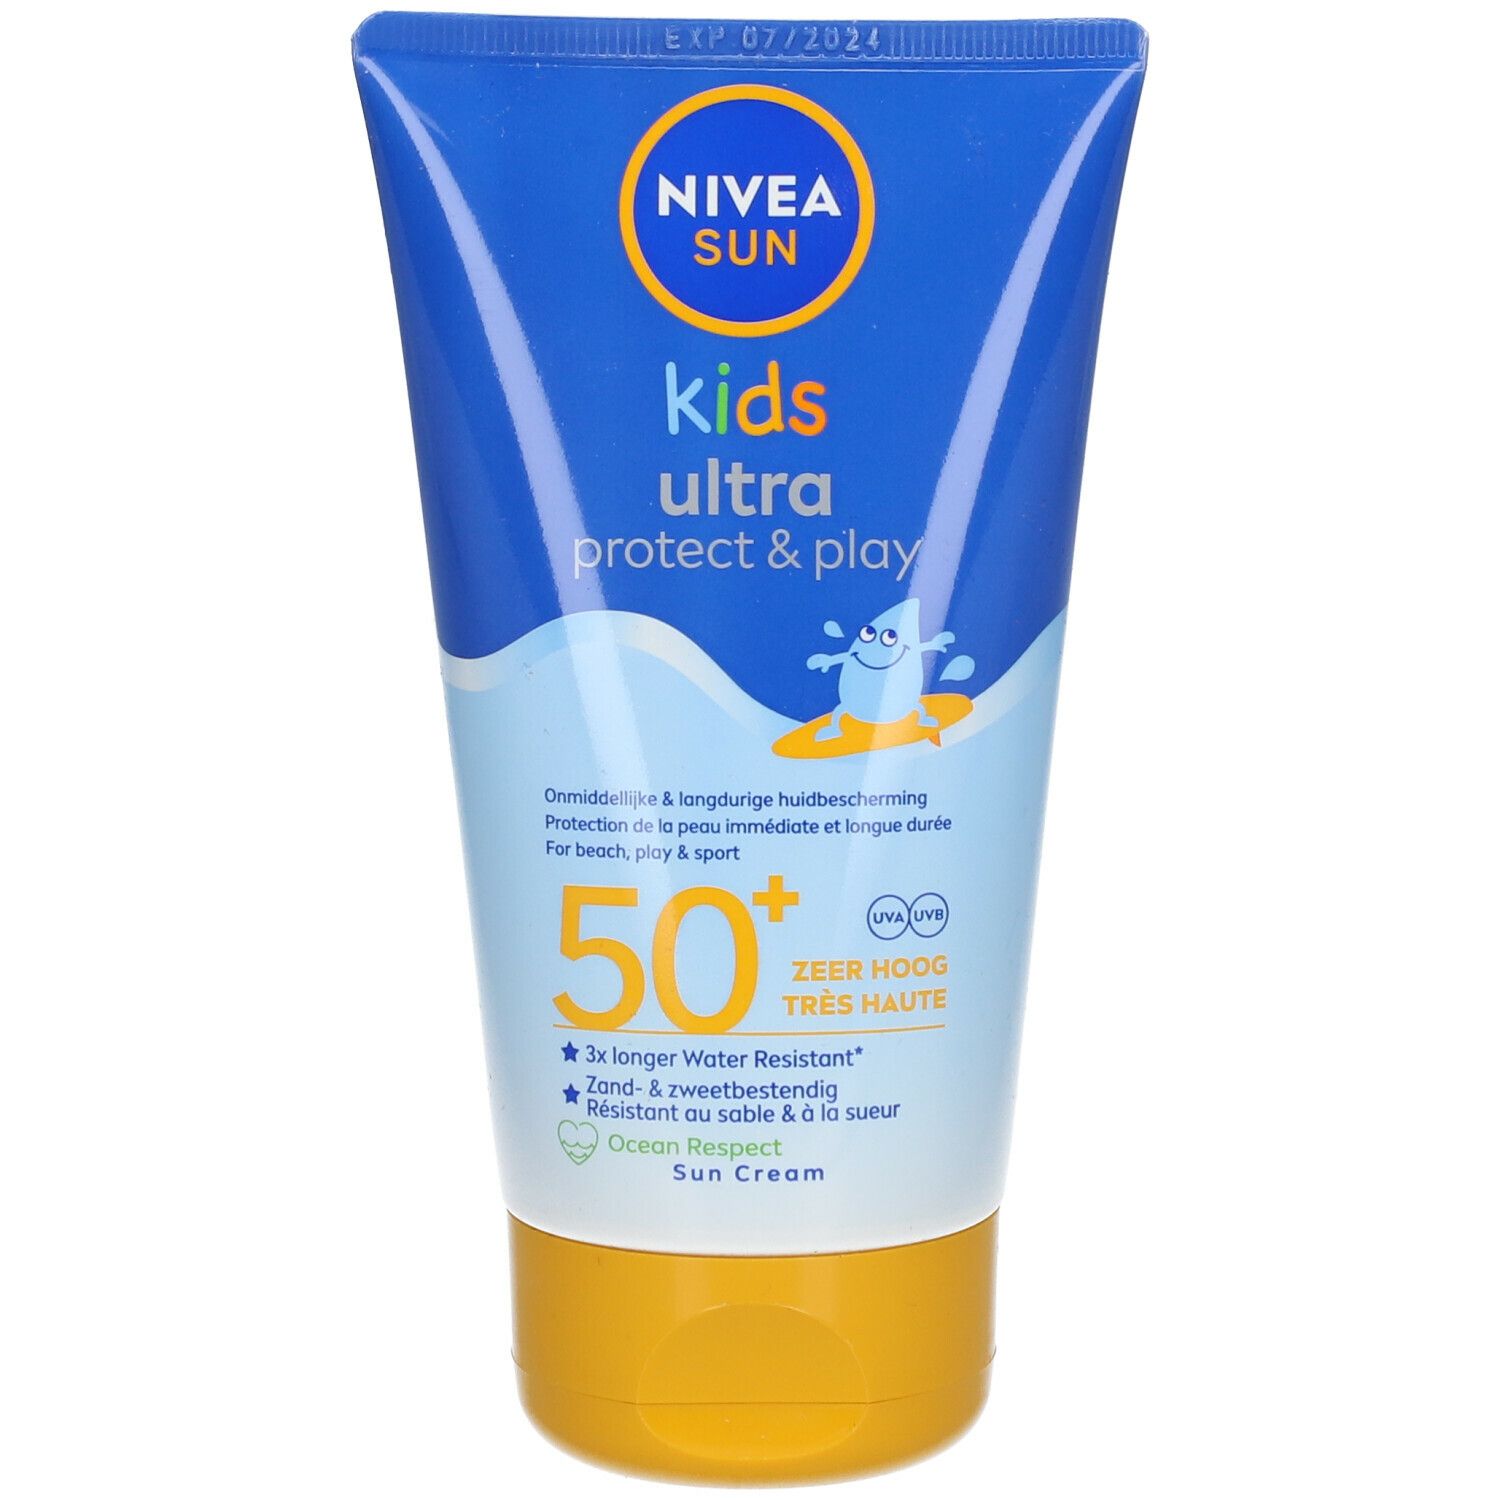 Nivea Sun Kids Ultra Protect & Play Lait solaire Spf50+